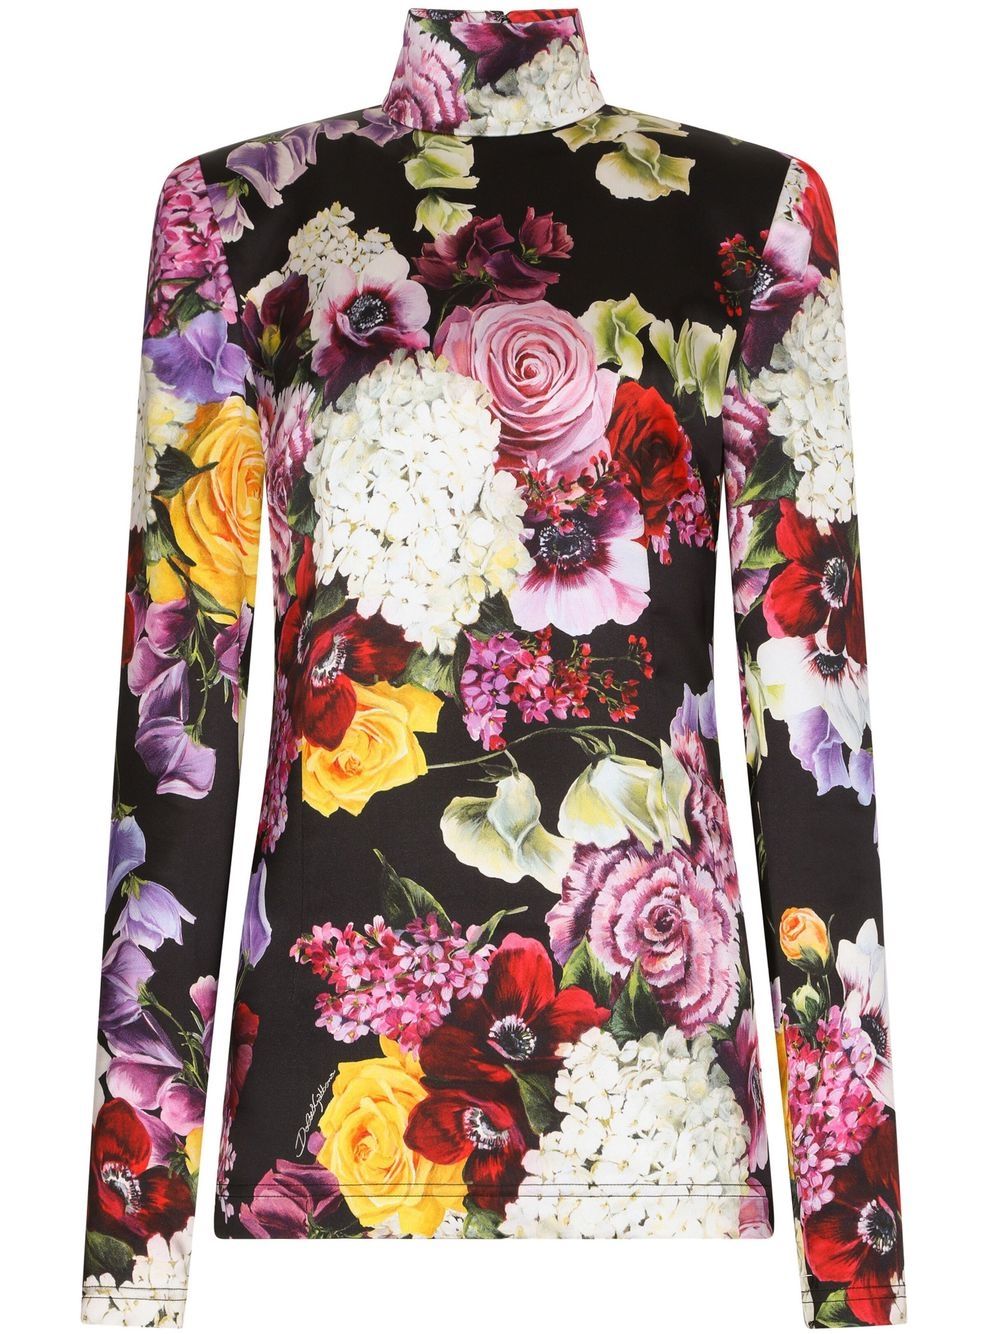 Dolce & Gabbana Floral Print Rectangle Bag, $1,495, farfetch.com